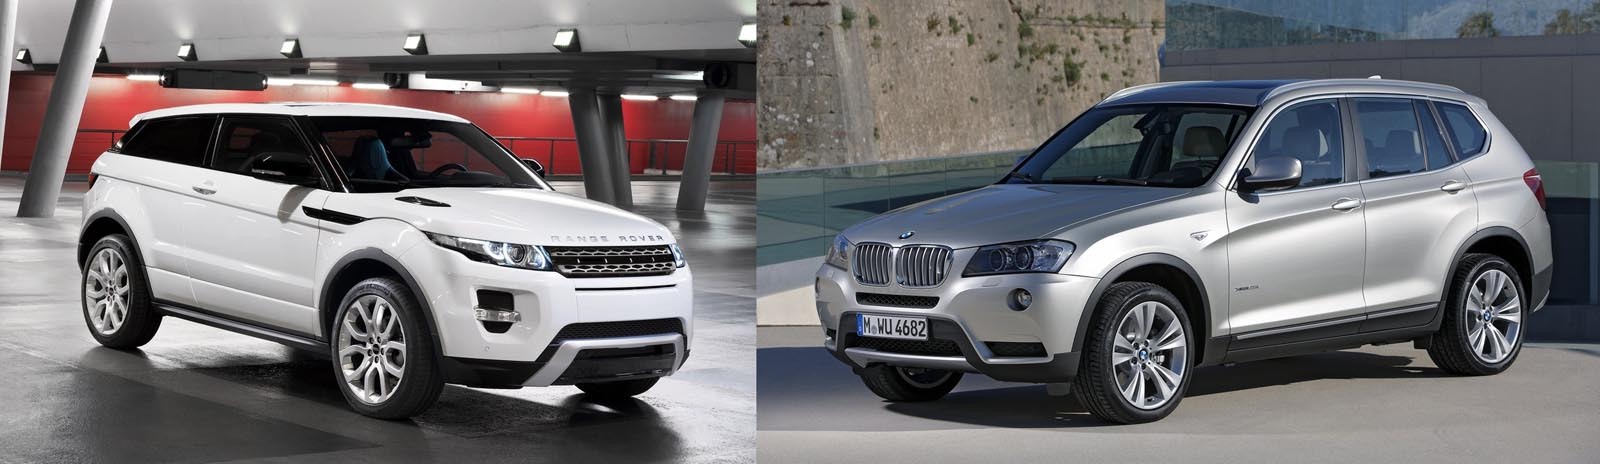 Range Rover Evoque vs. BMW X3